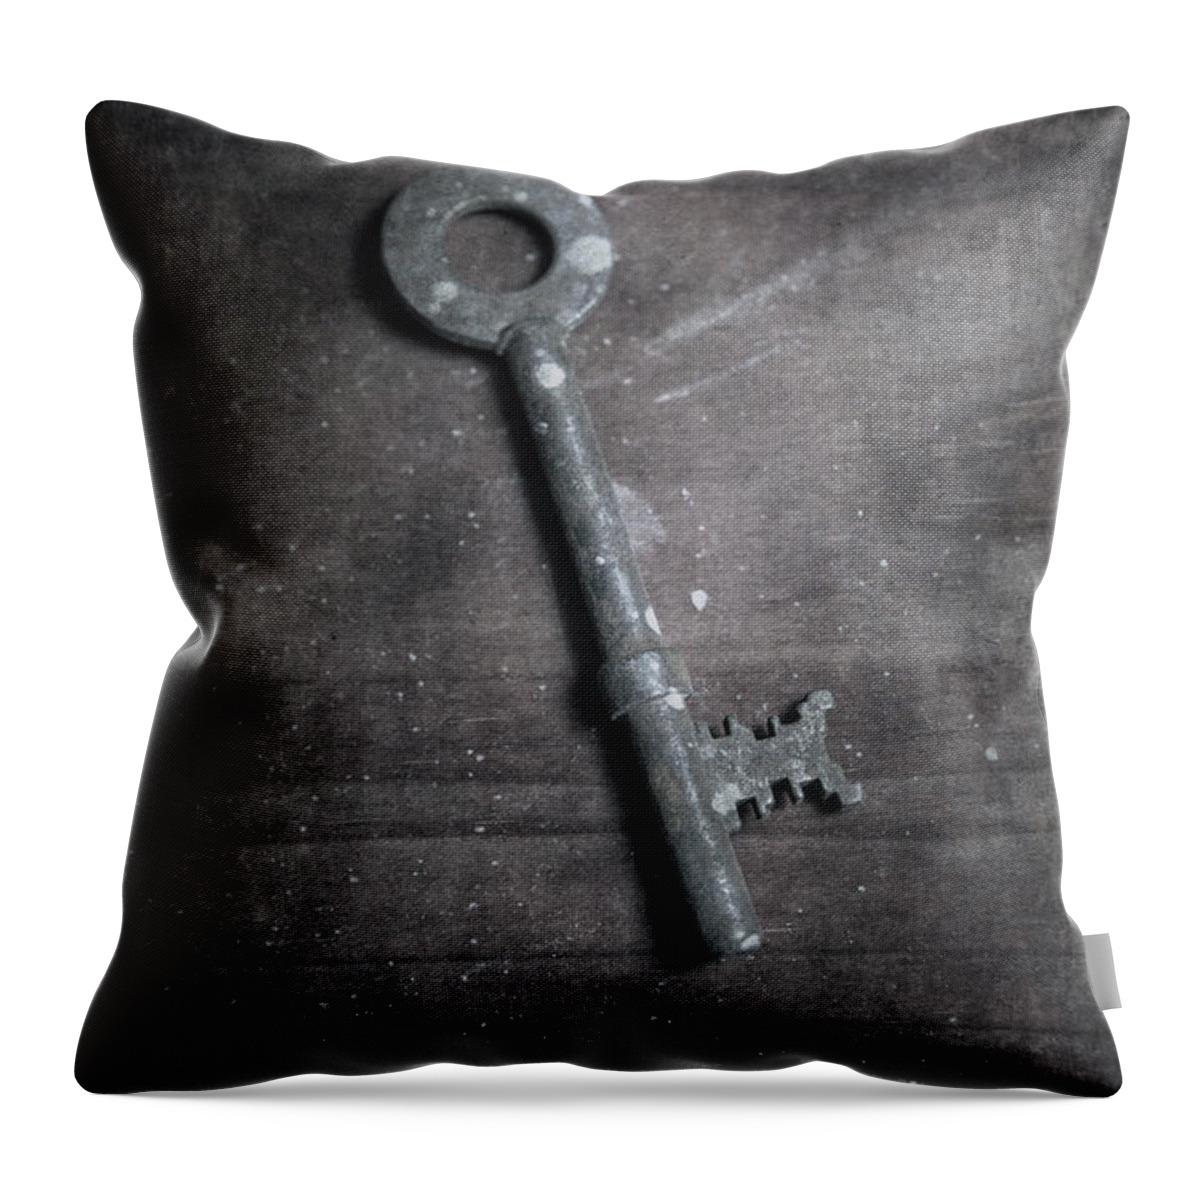 Key Throw Pillow featuring the photograph key #2 by Joana Kruse